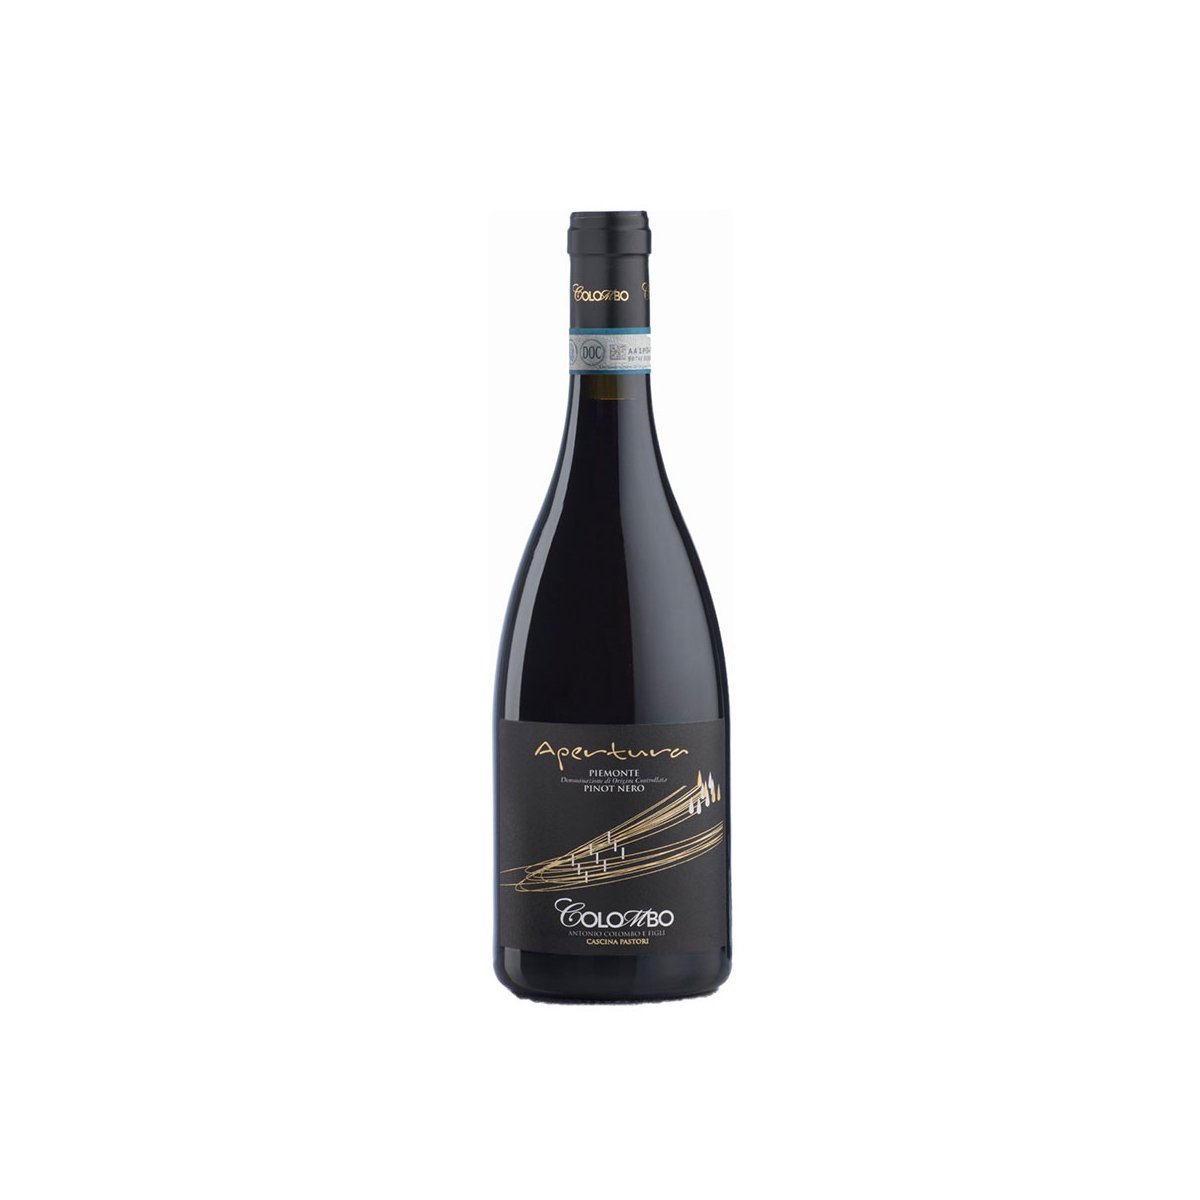 Apertura Pinot nero 2015  Colombo Cascina Pastori - Piemonte